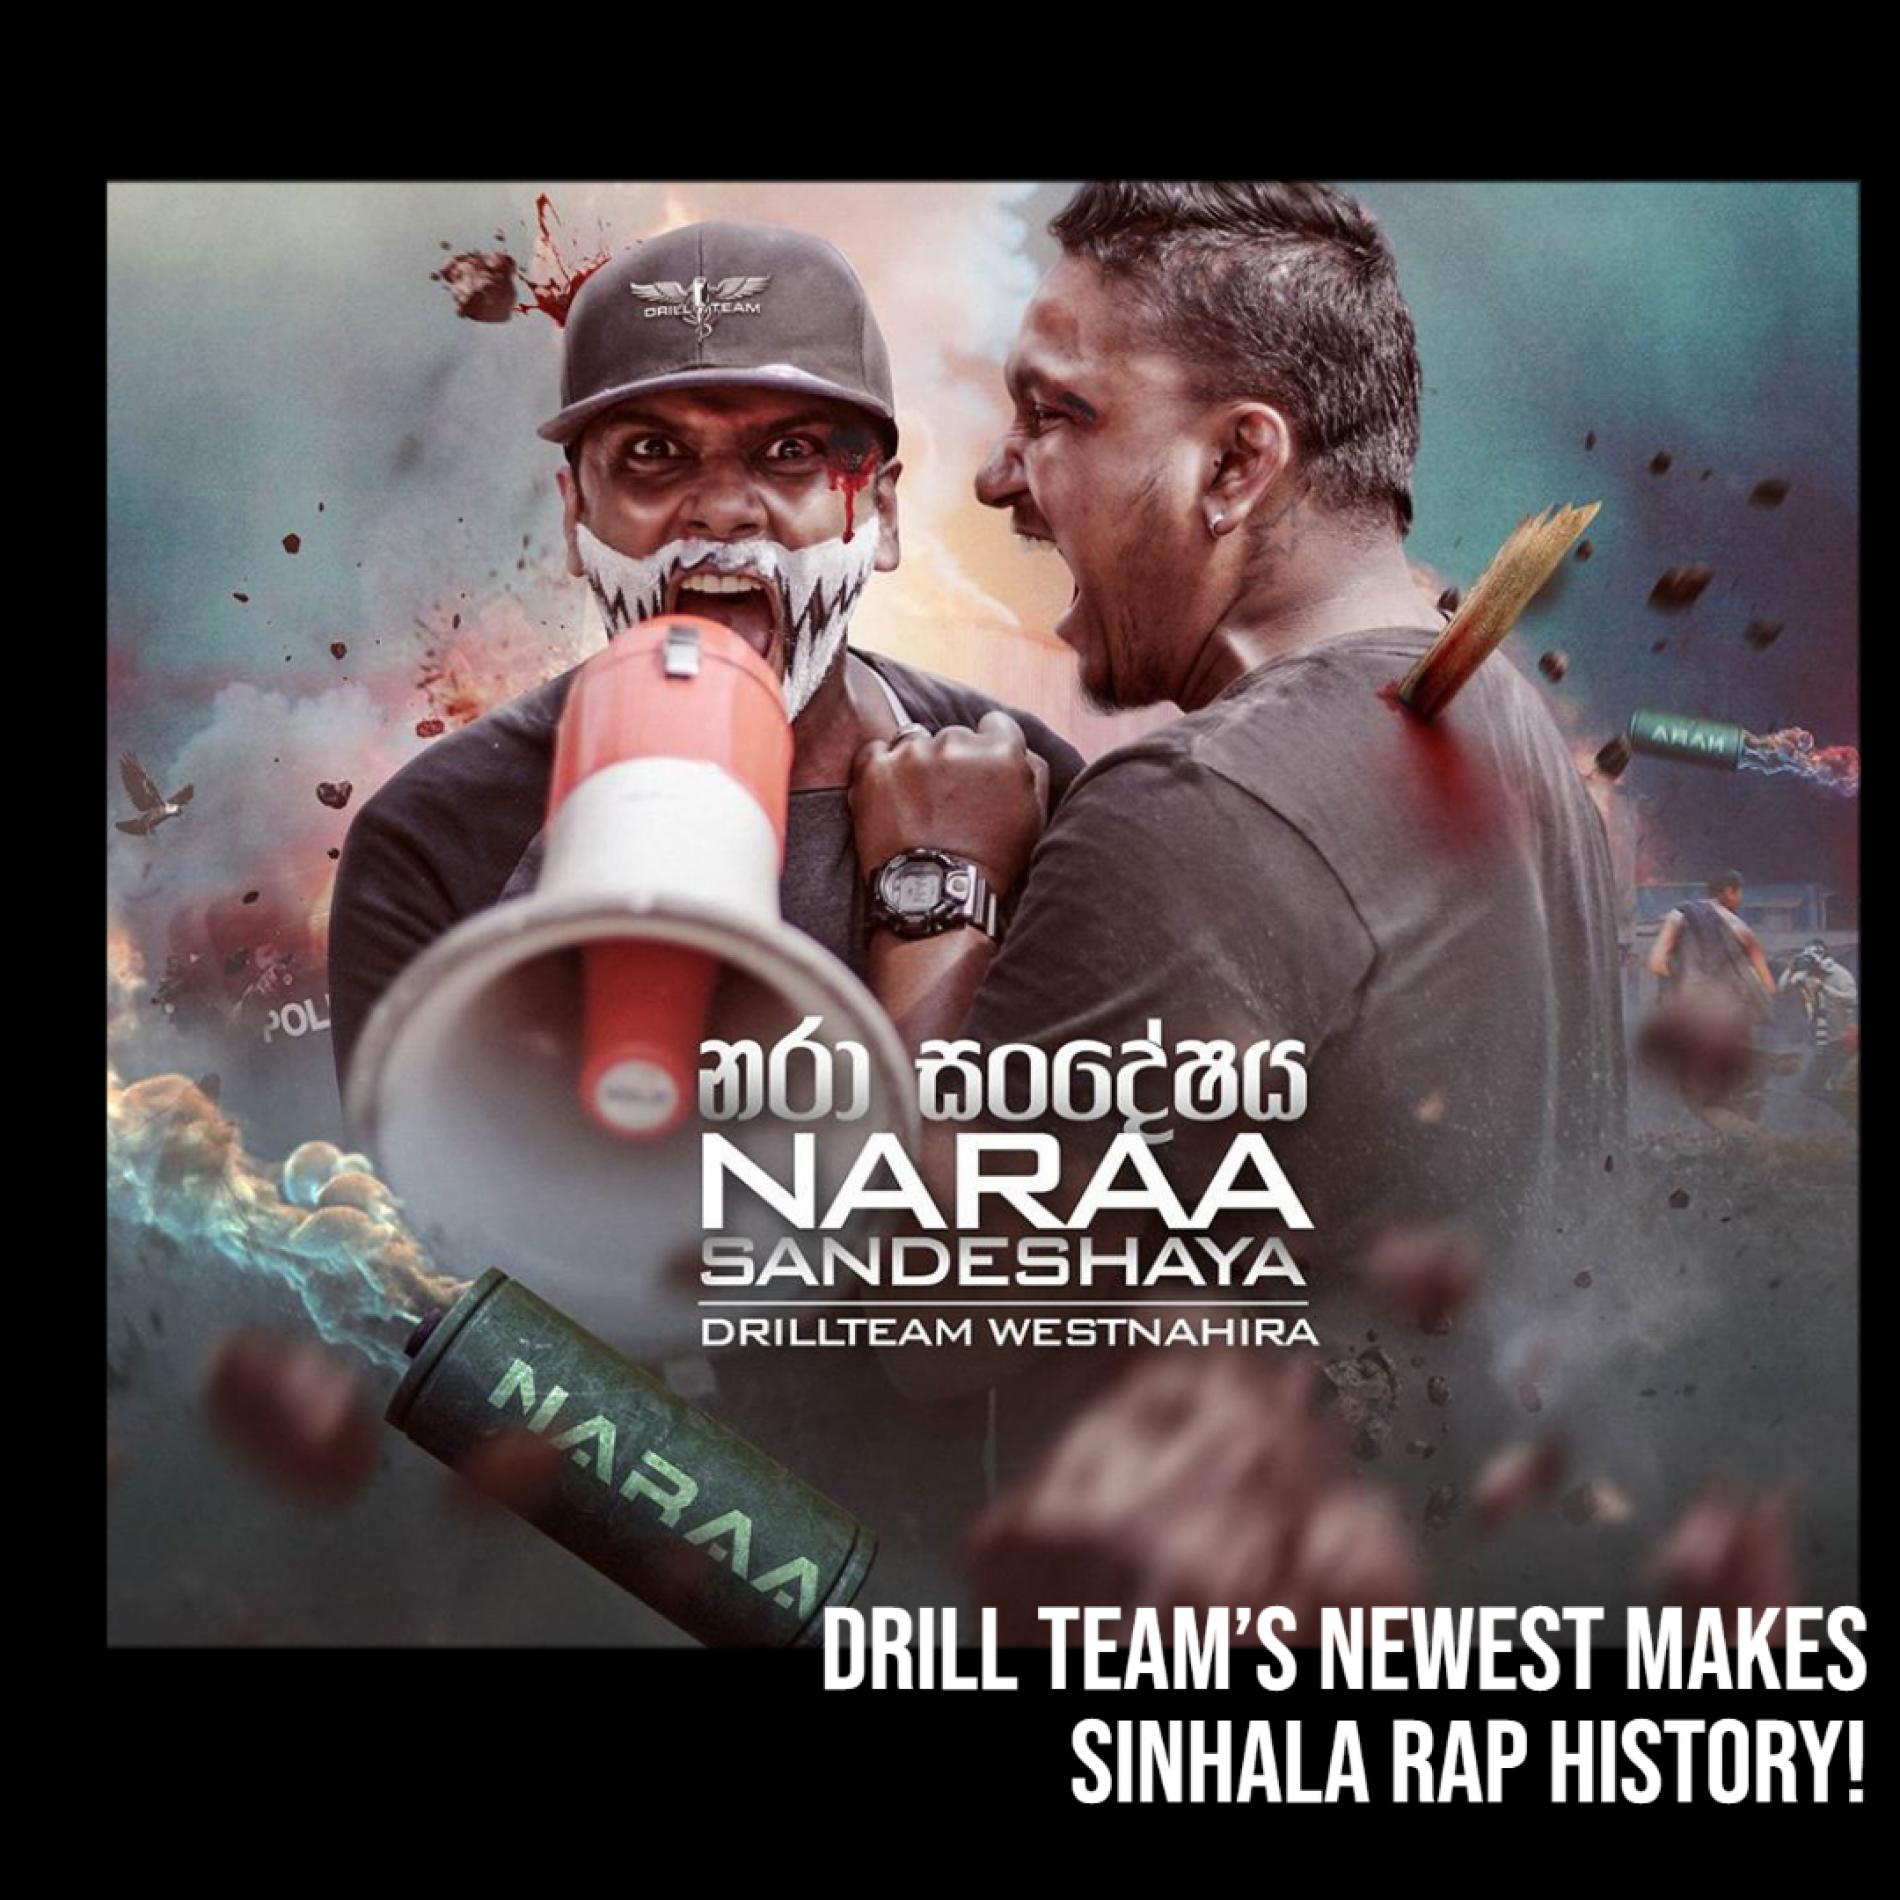 Drill Team Makes Sinhala Rap History On The 23rd Of May With Naara Sandeshaya.